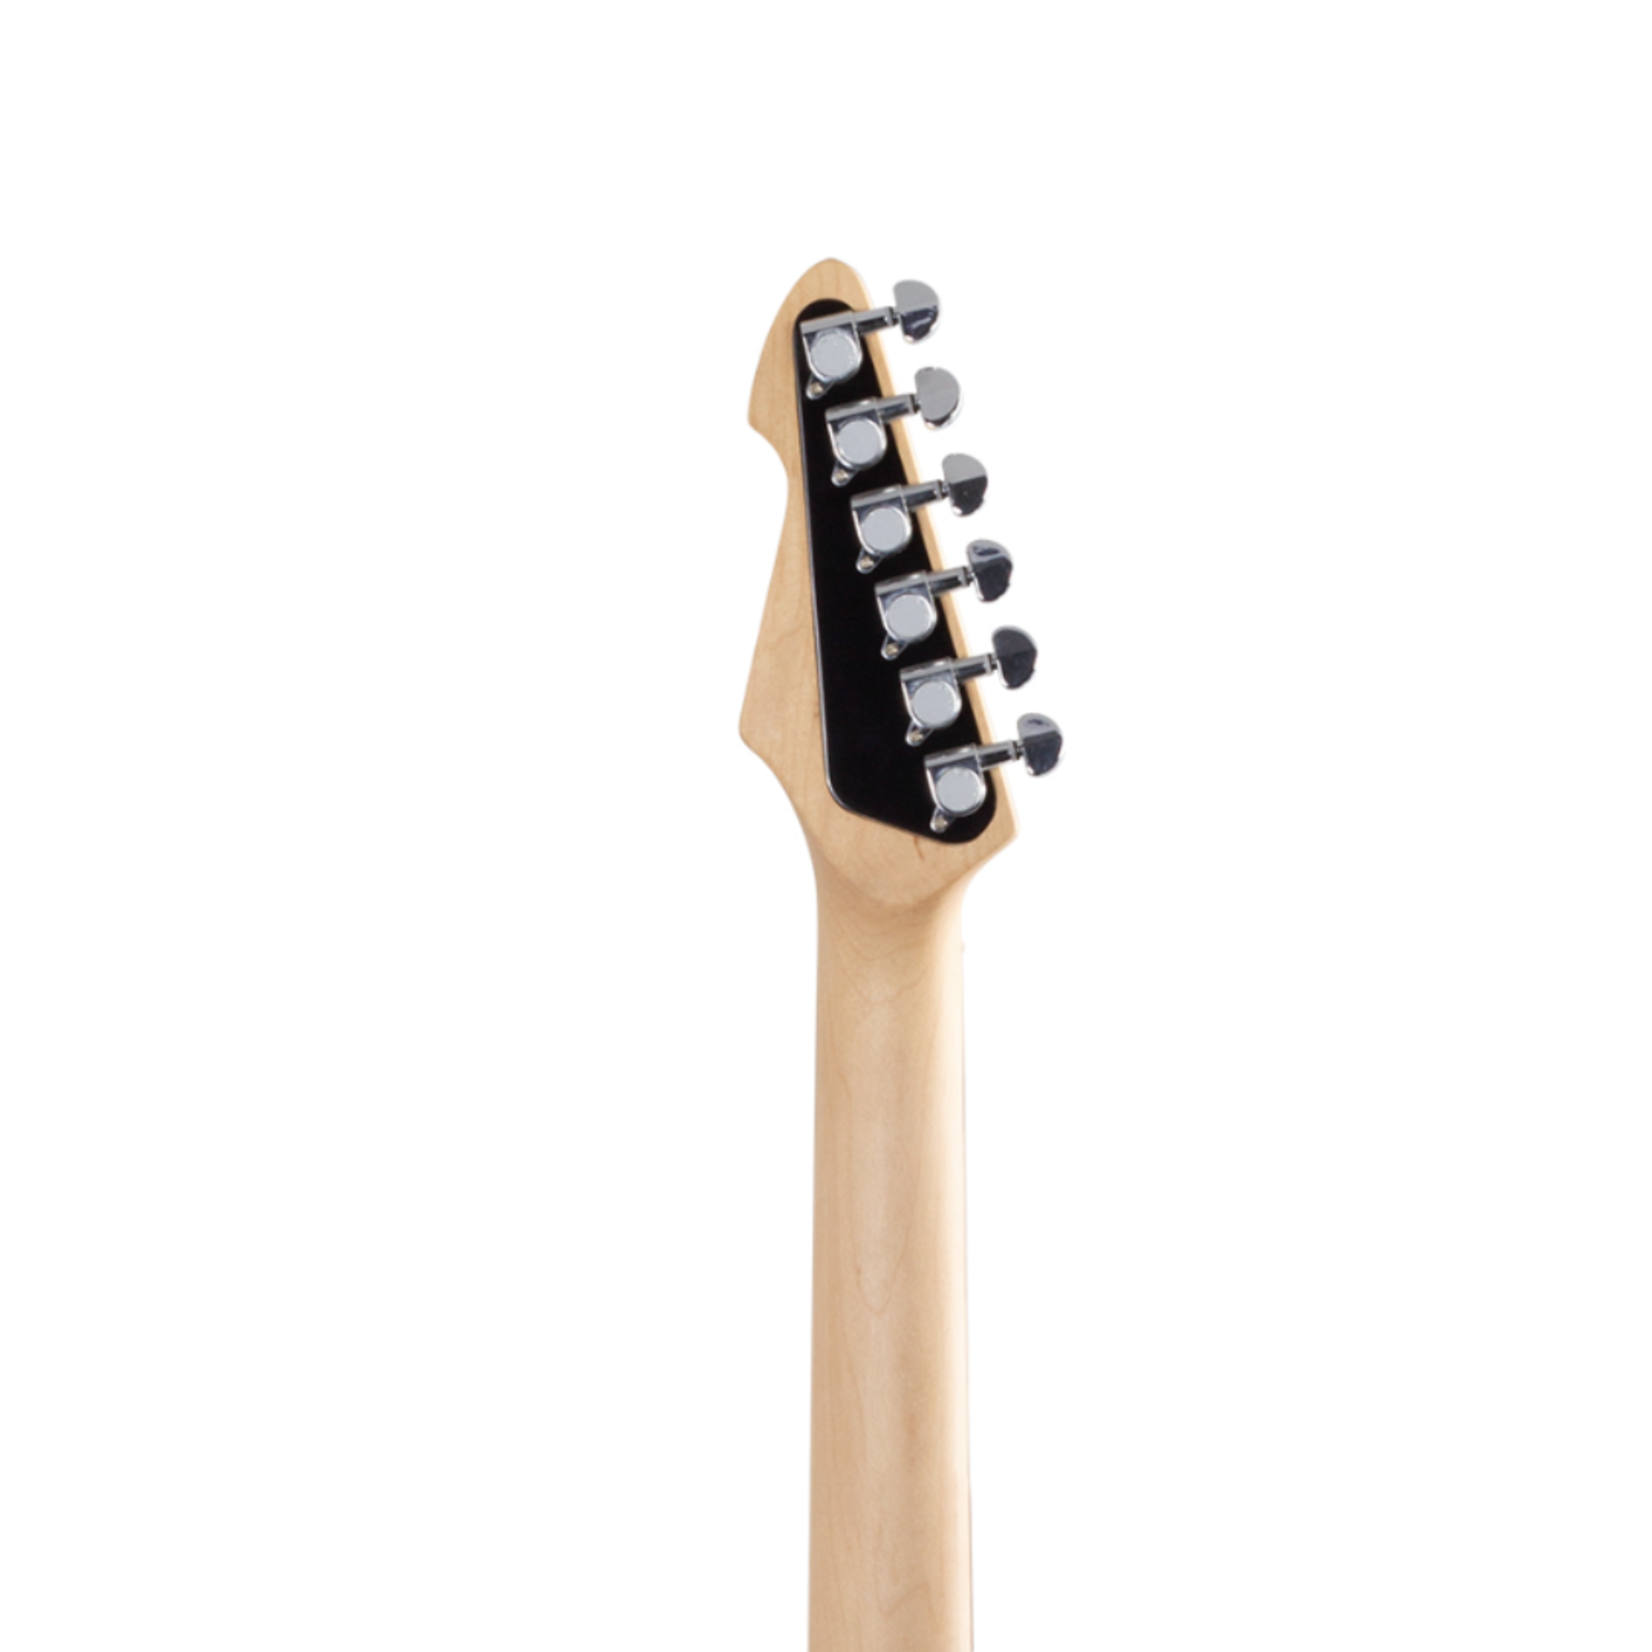 Peavey Raptor Custom 6 String Electric Guitar - Red